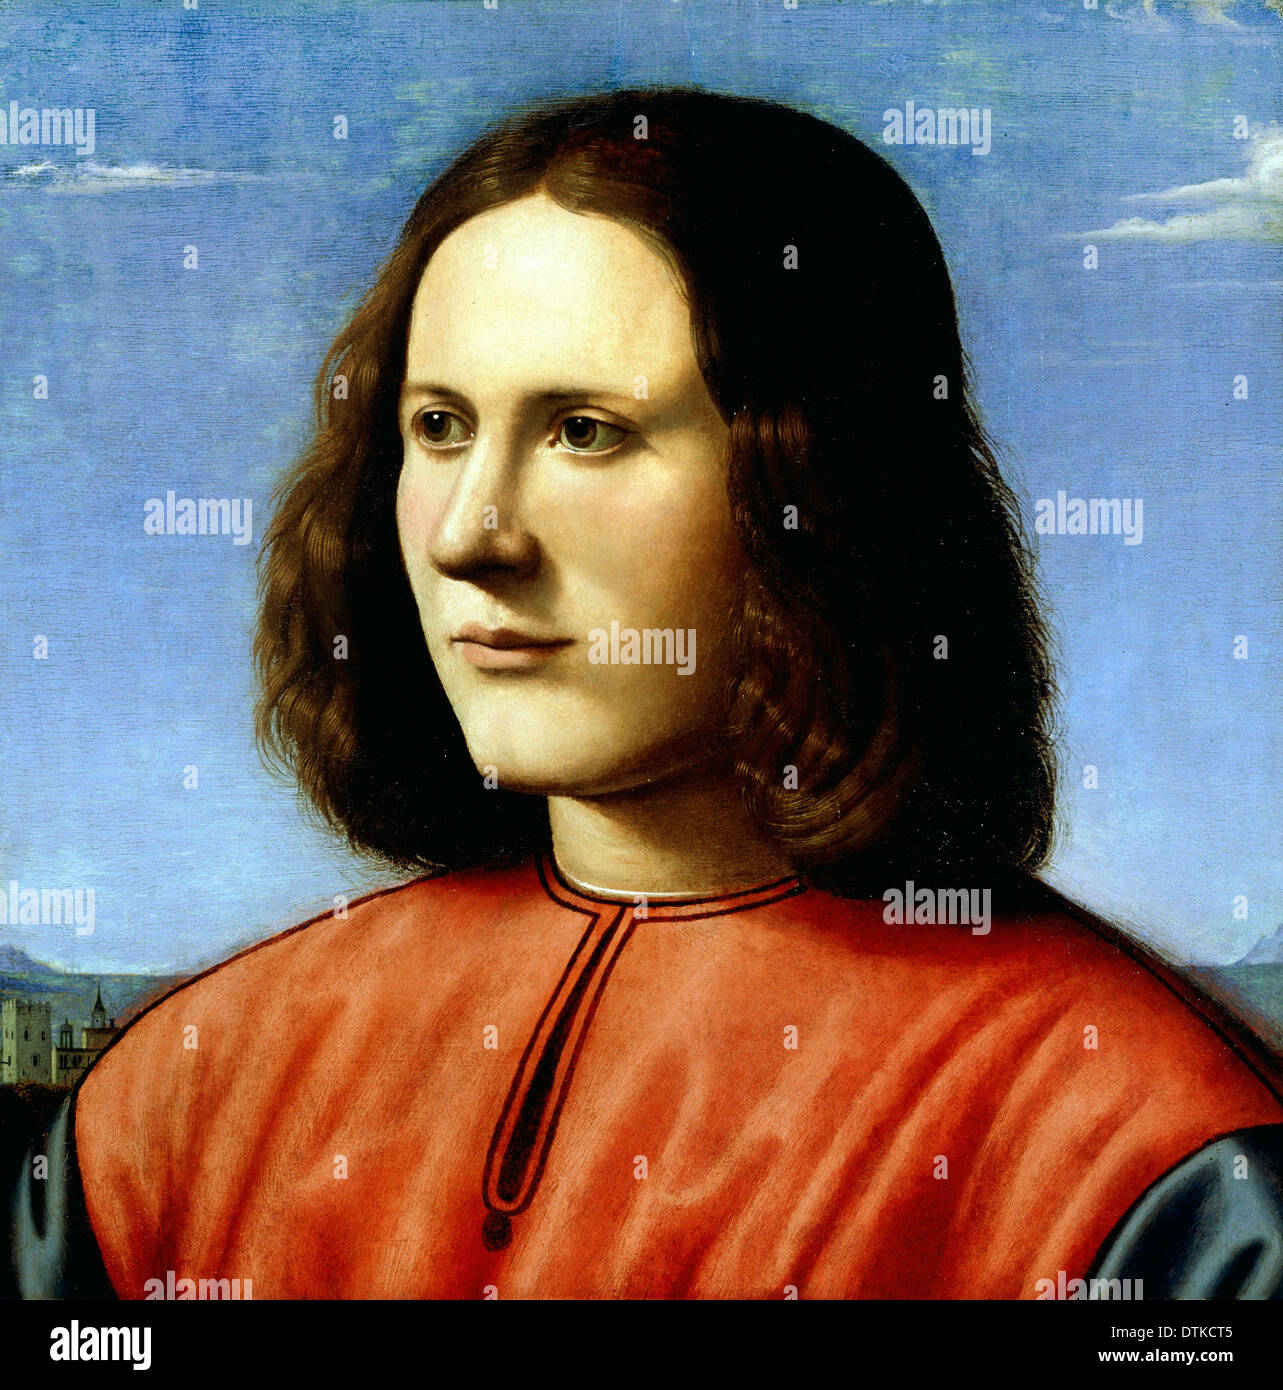 Piero di Cosimo, A Young Man. Circa 1500. Oil on panel. Dulwich Picture Gallery, London, UK. Stock Photo